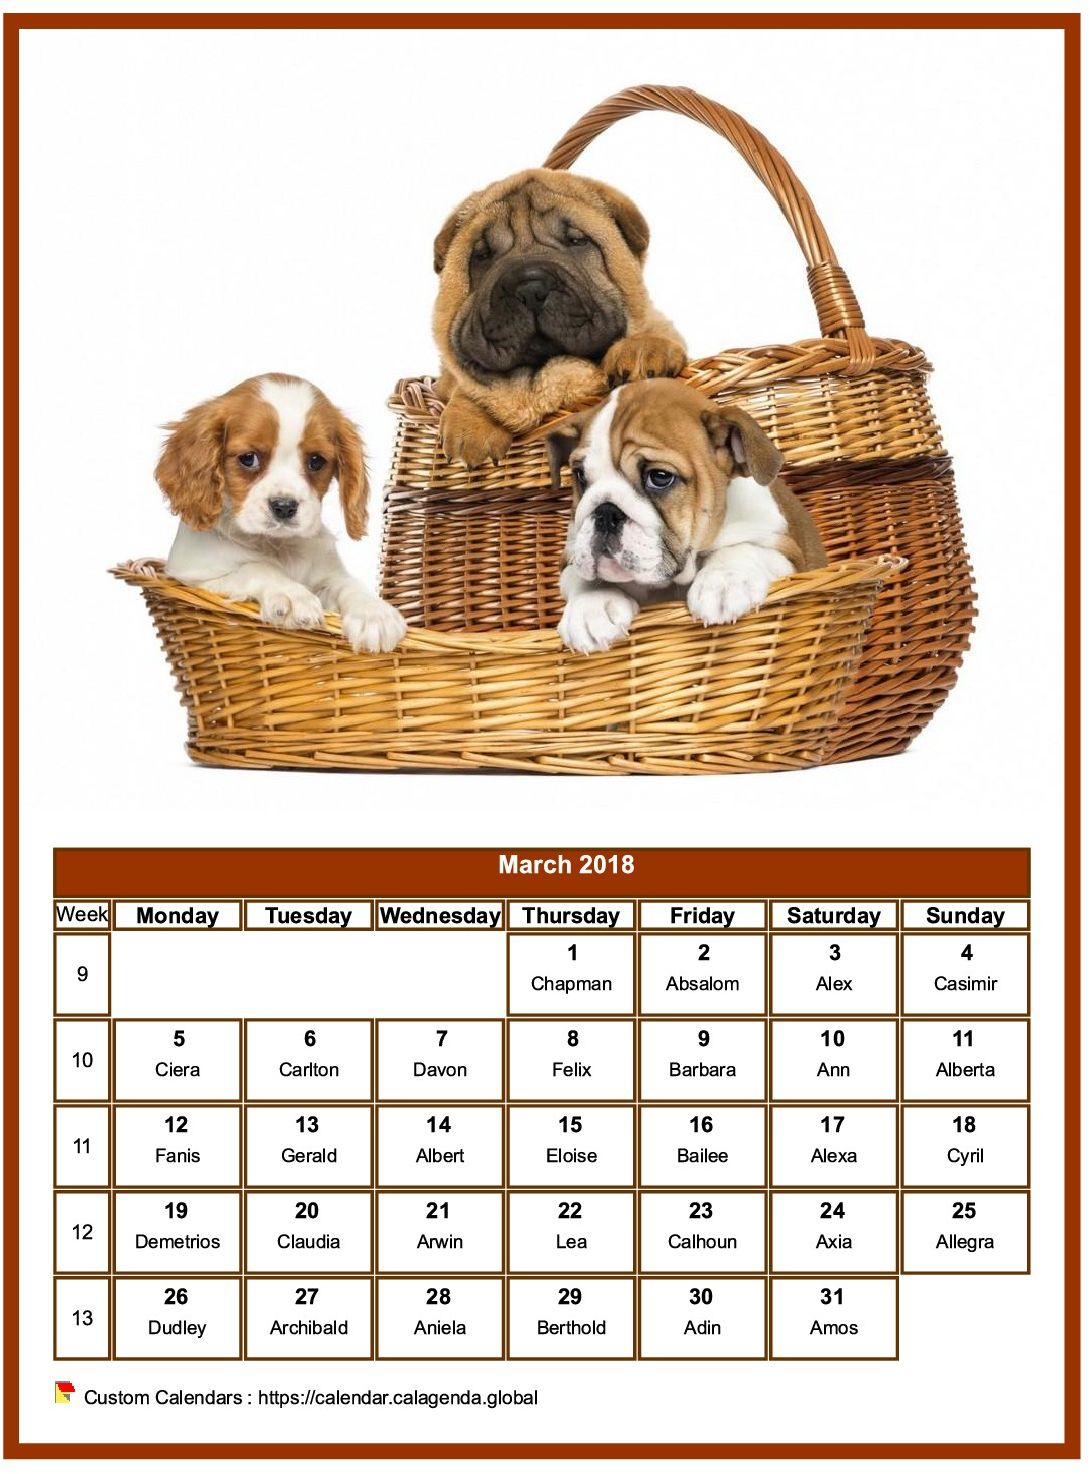 Calendar March 2018 dogs